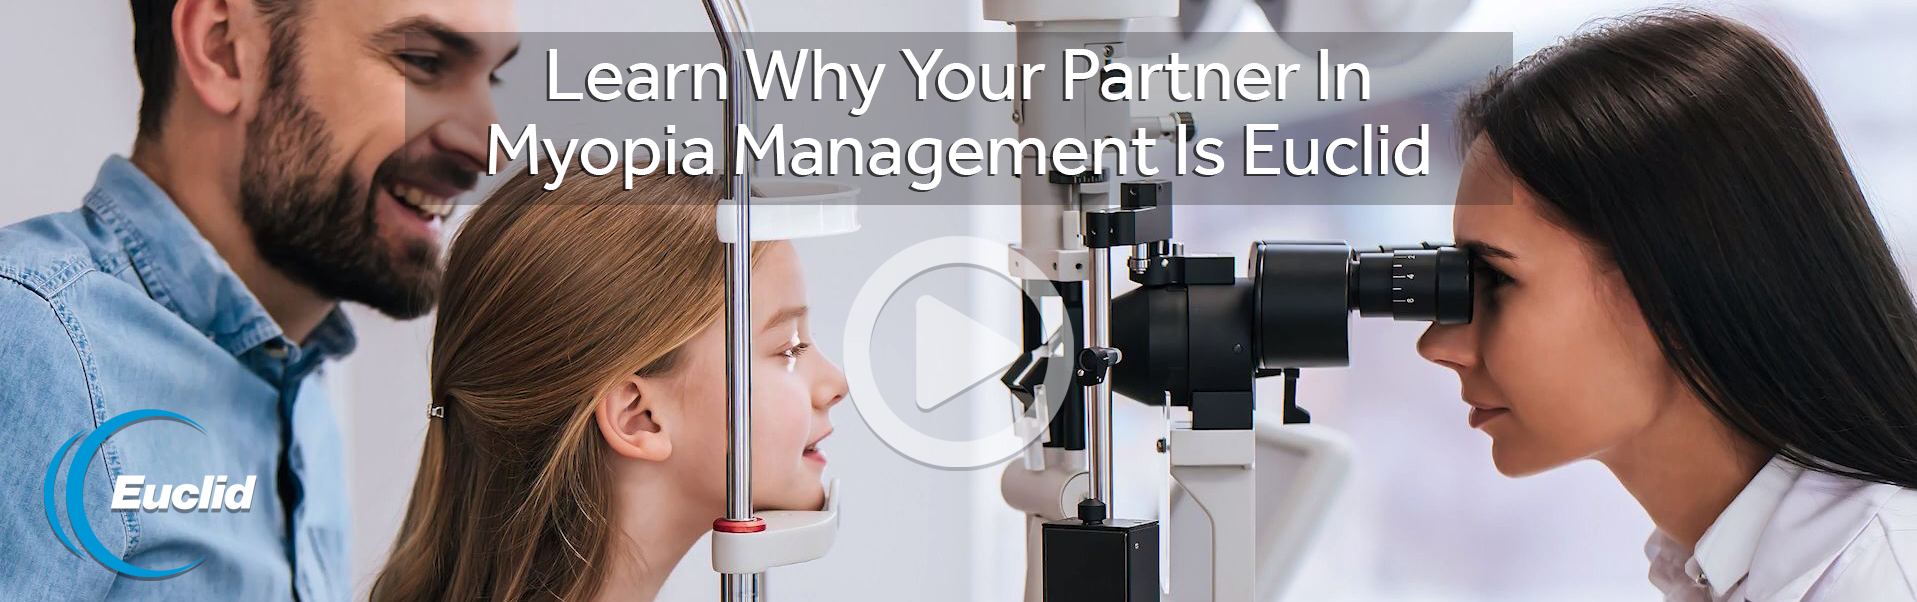 Euclid - Your Partner in Myopia Management | EuclidSys.com